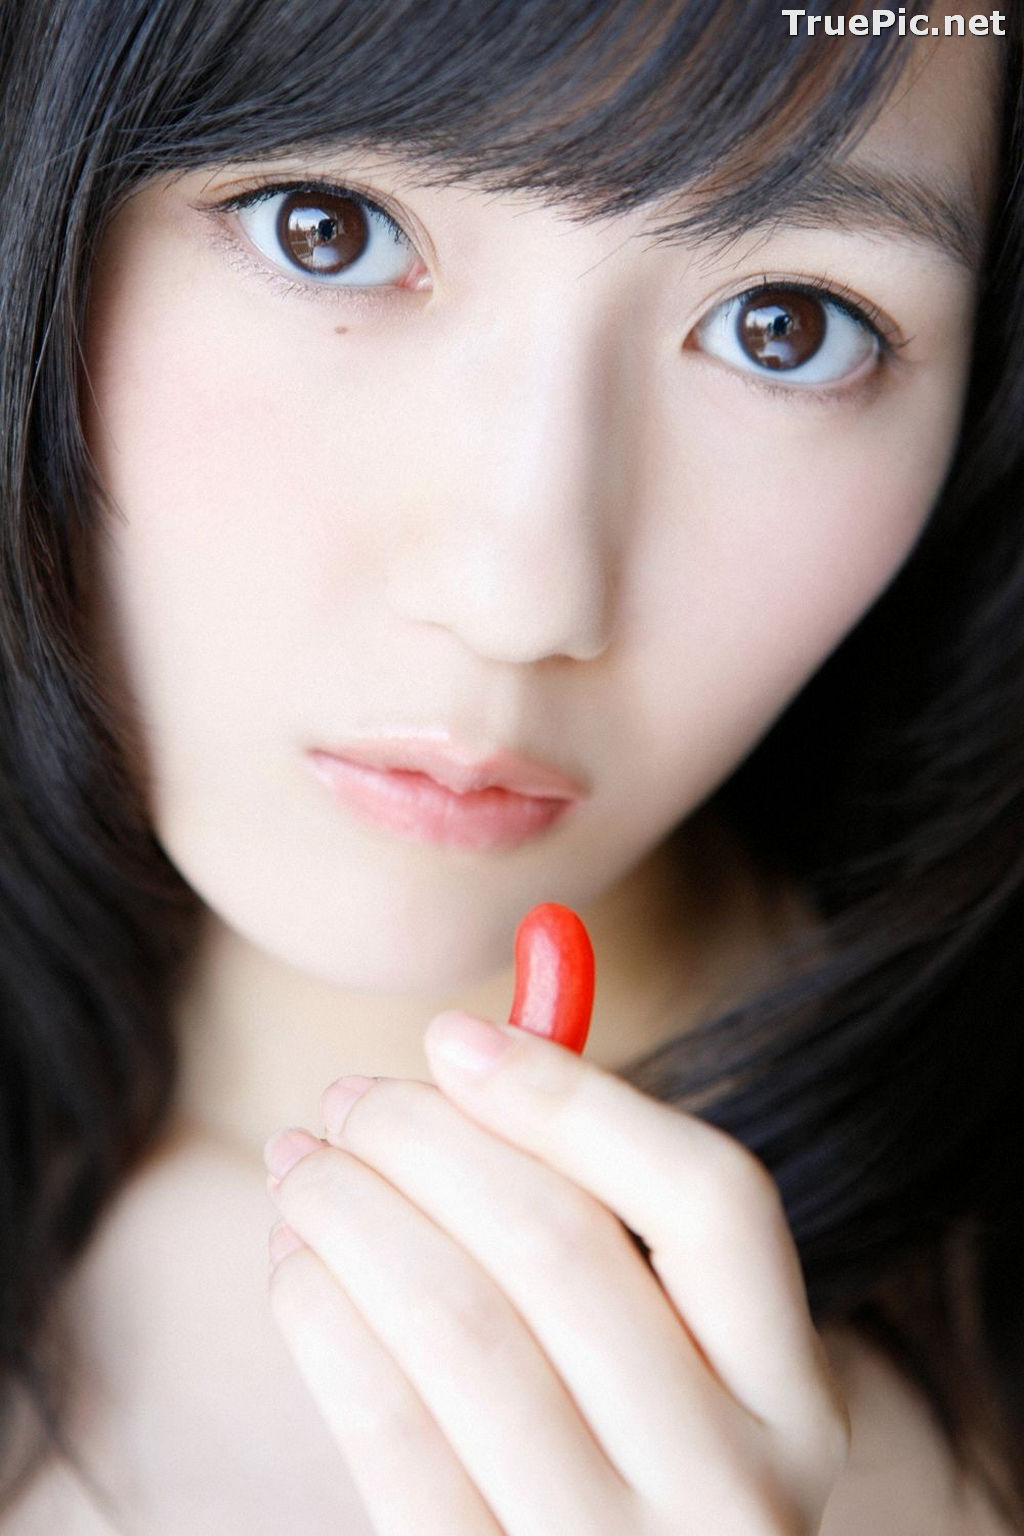 Image [YS Web] Vol.531 - Japanese Idol Girl Group (AKB48) - Mayu Watanabe - TruePic.net - Picture-54